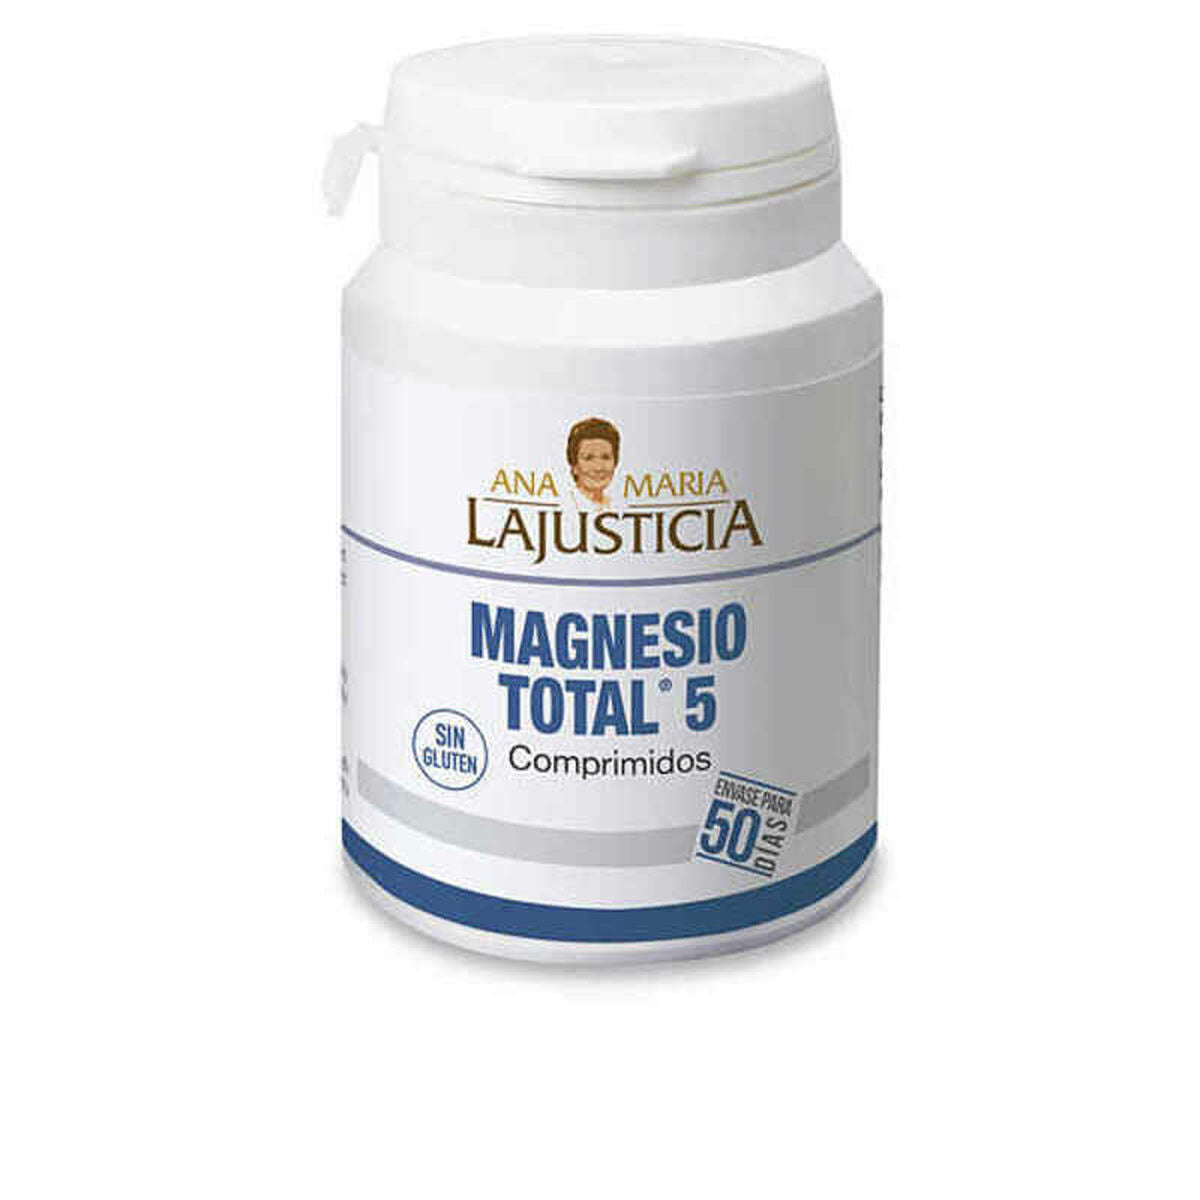 Magnésium Total 5 Ana María Lajusticia Magnesio Total (100 uds)